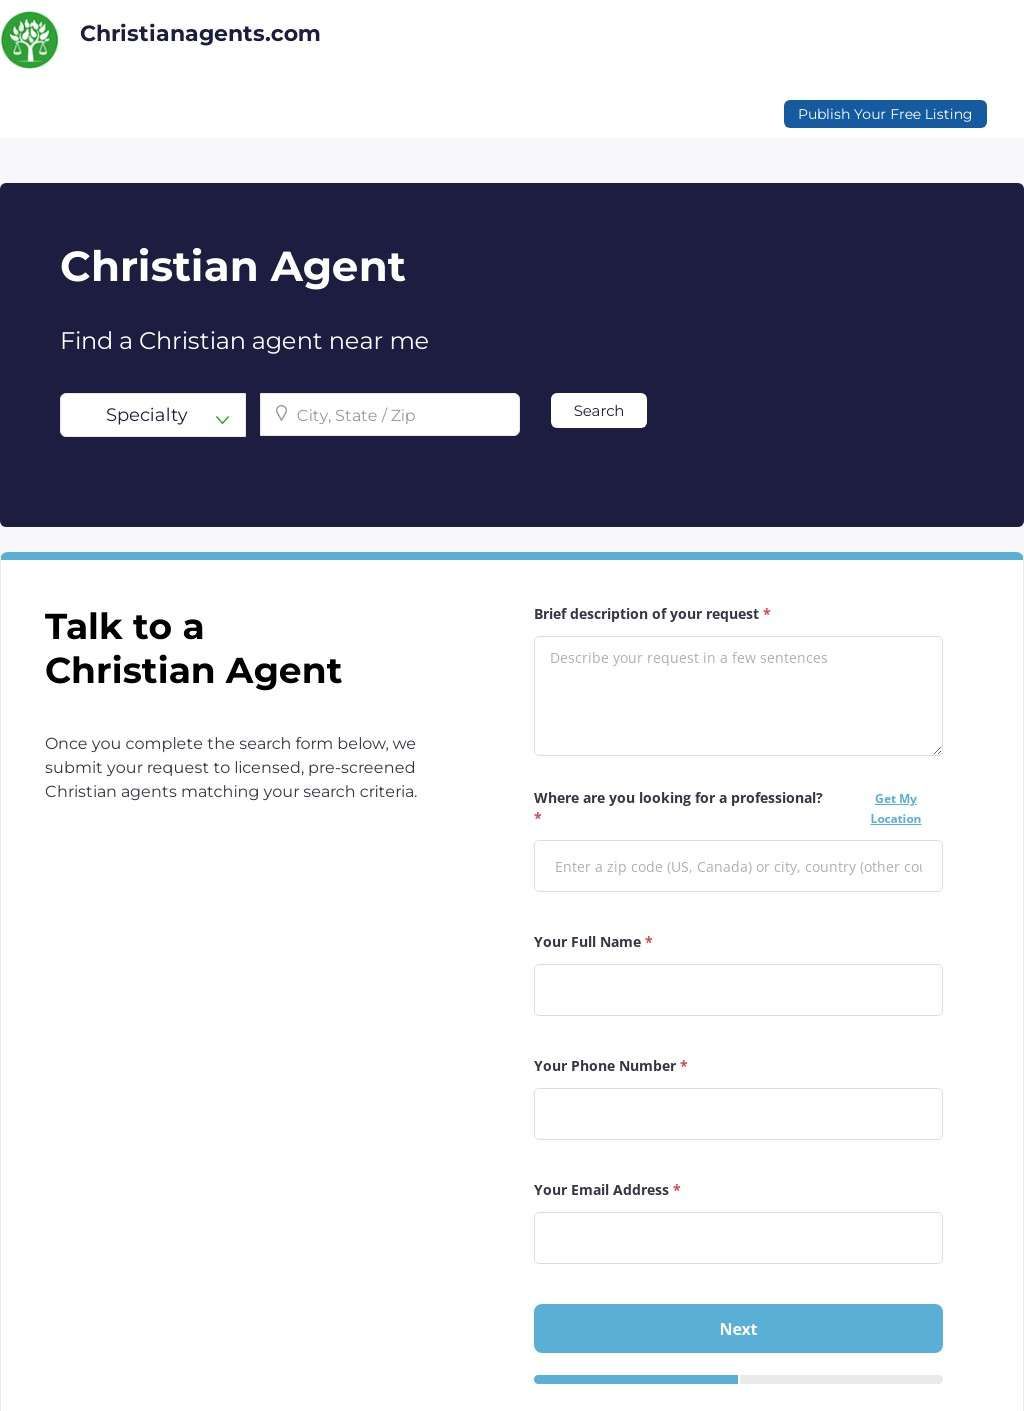 Christian Agents